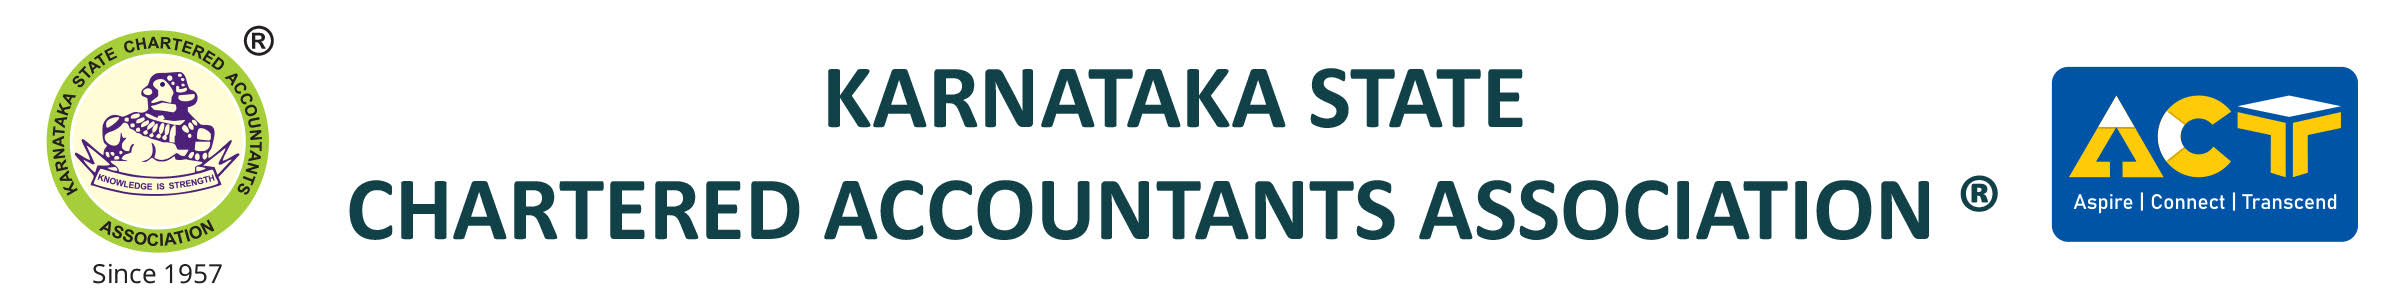 KARNATAKA STATE CHARTERED ACCOUNTANTS ASSOCIATION (R)